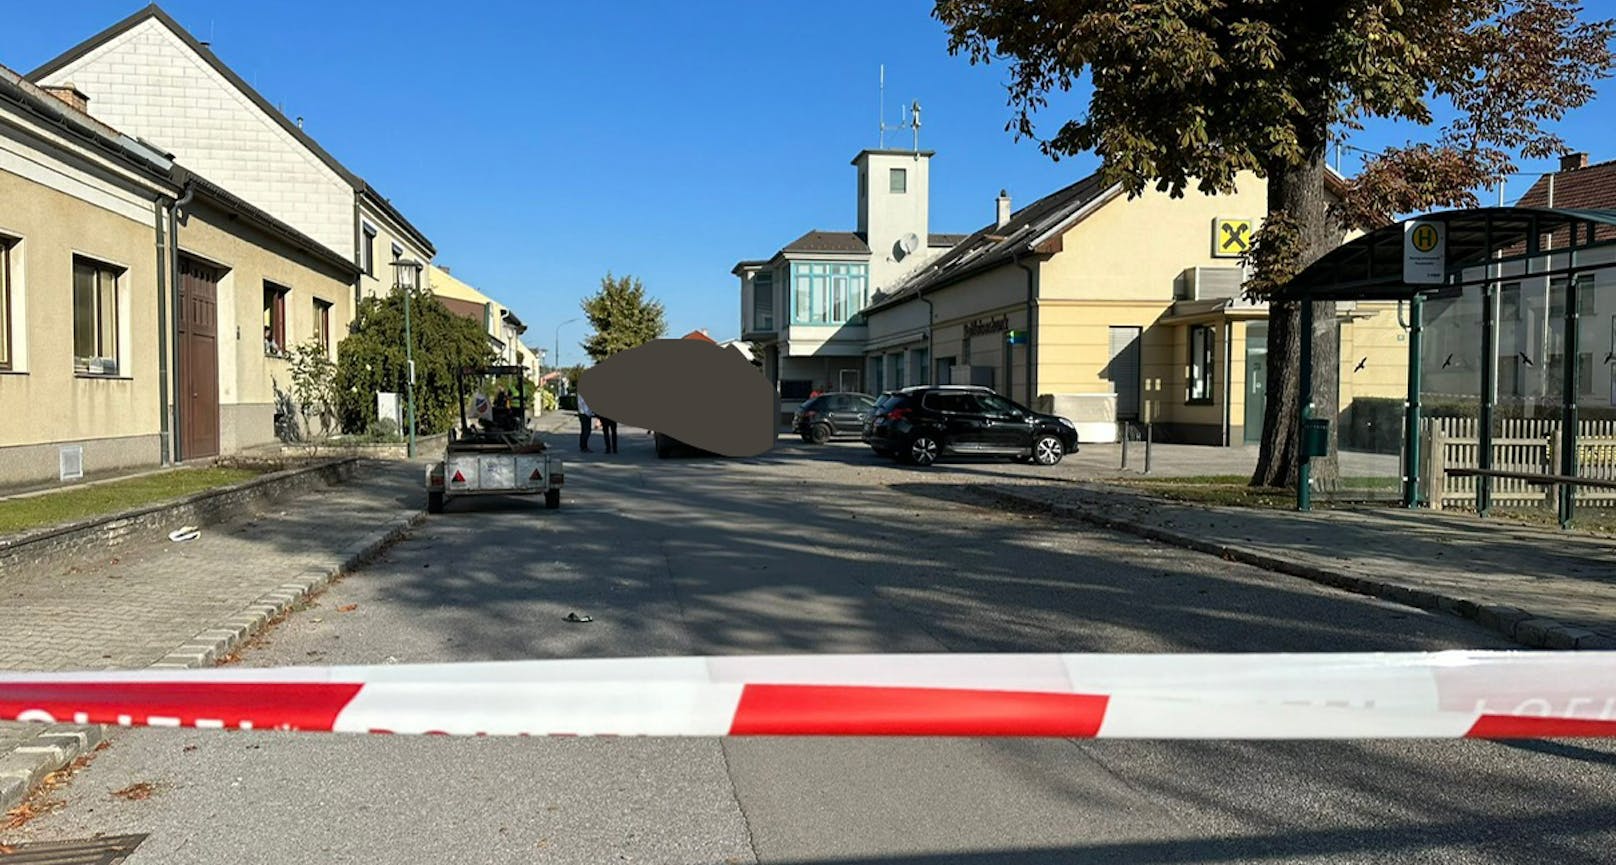 Bankomat-Sprengung in Markgrafneusiedl: Polizei sperrte Areal ab